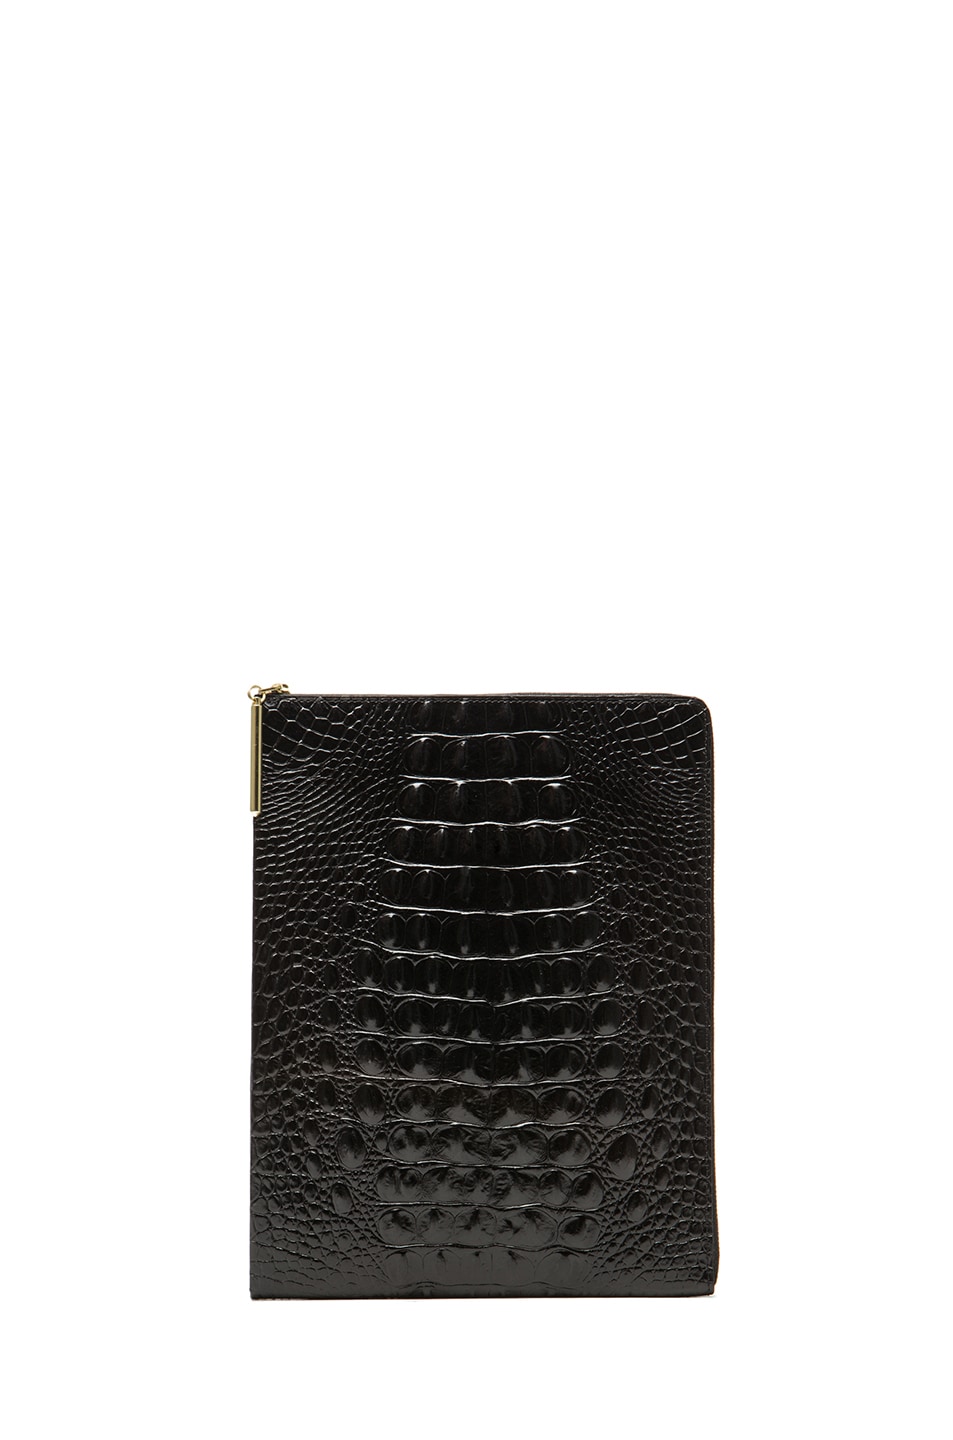 Image 1 of 3.1 phillip lim Embossed Leather iPad Sleeve in Black Croc